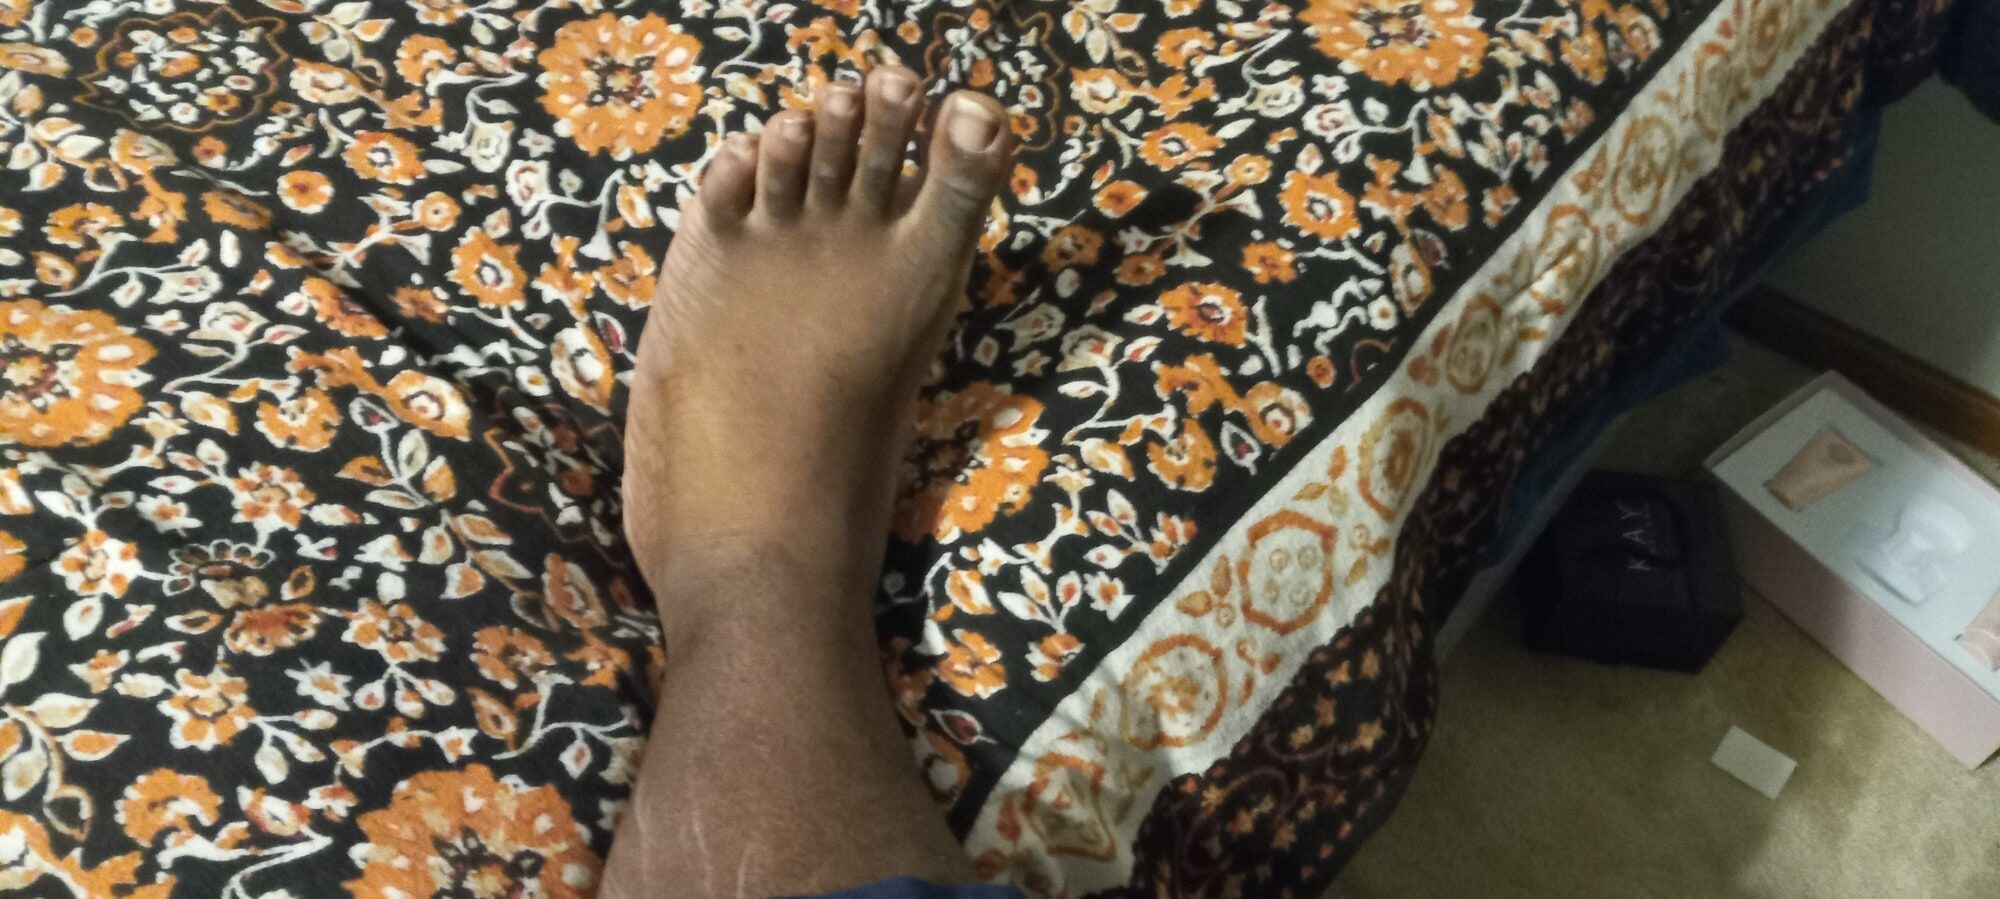 Pics of my Feet #7